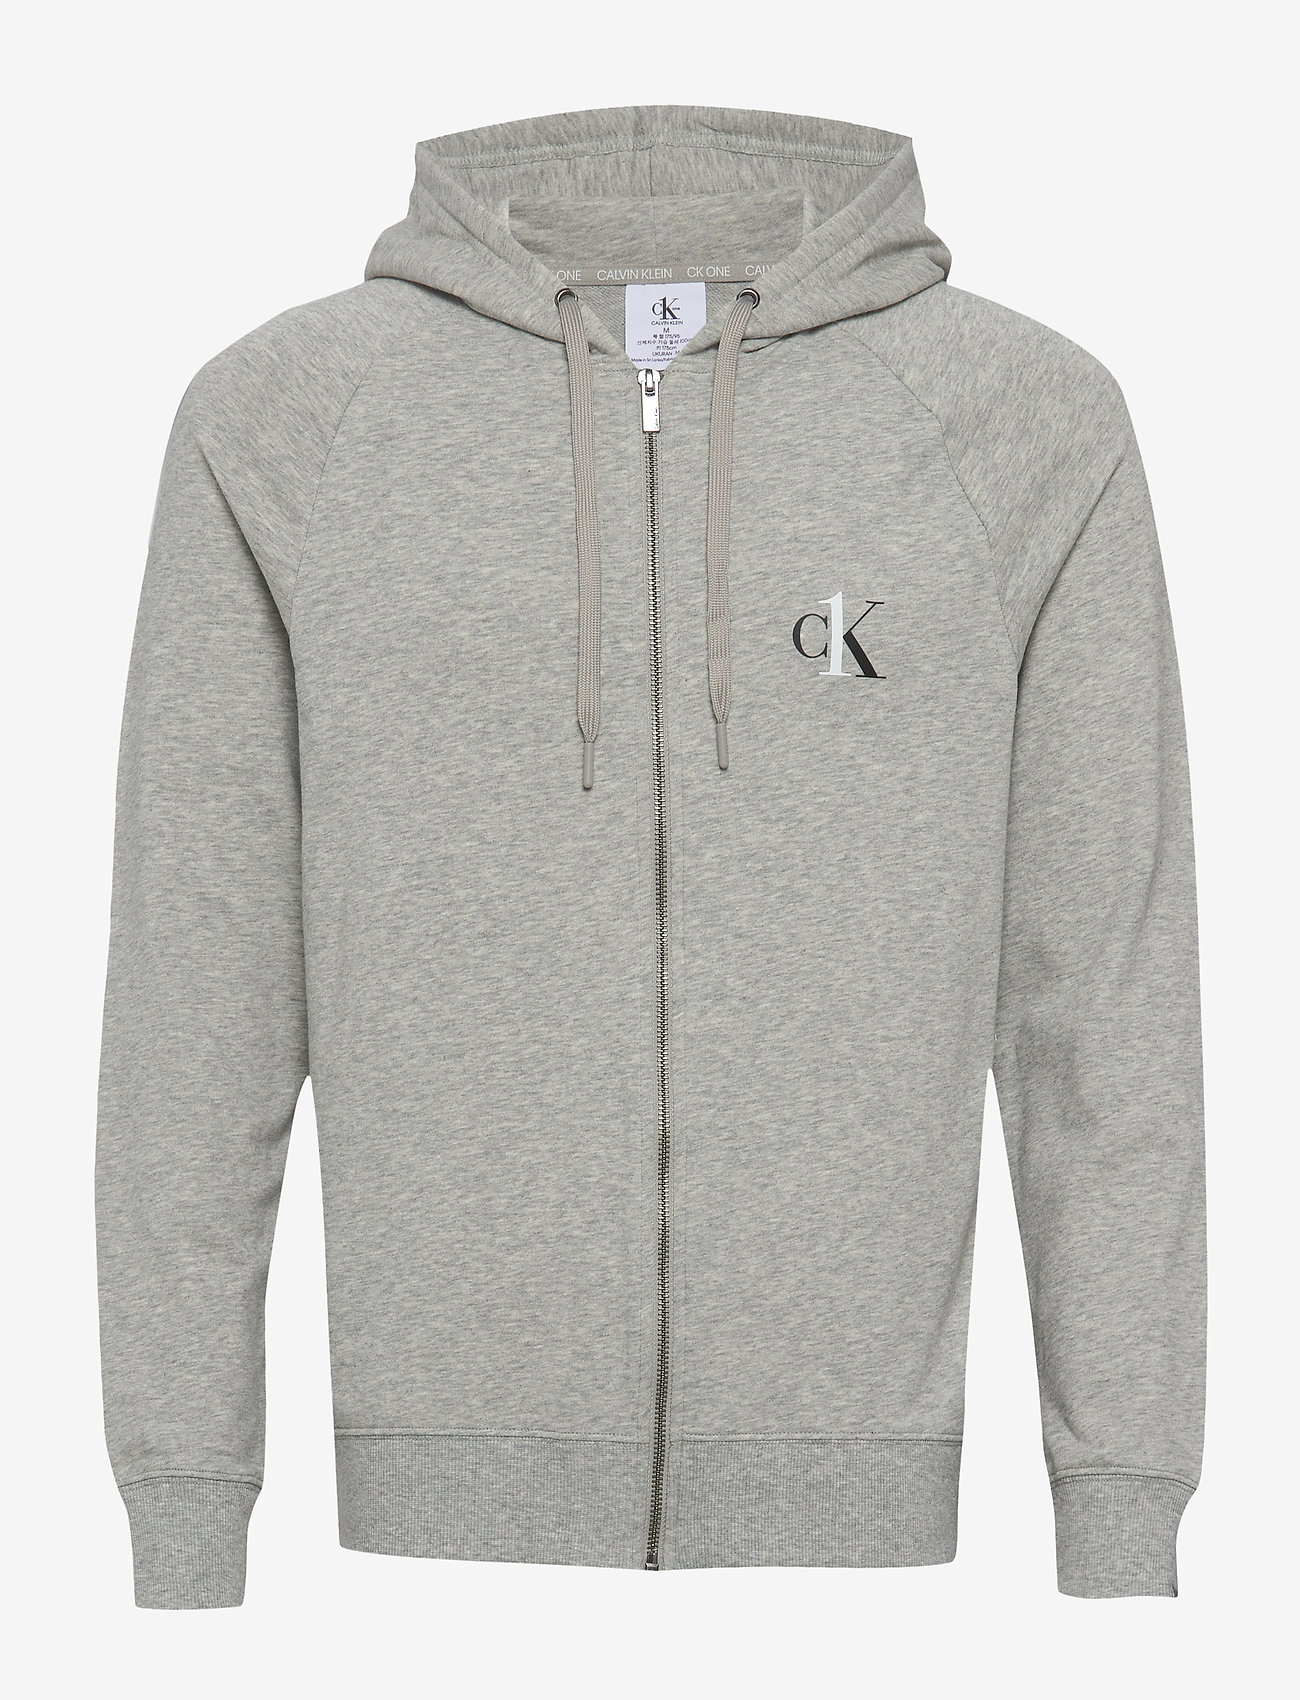 grey calvin klein zip hoodie